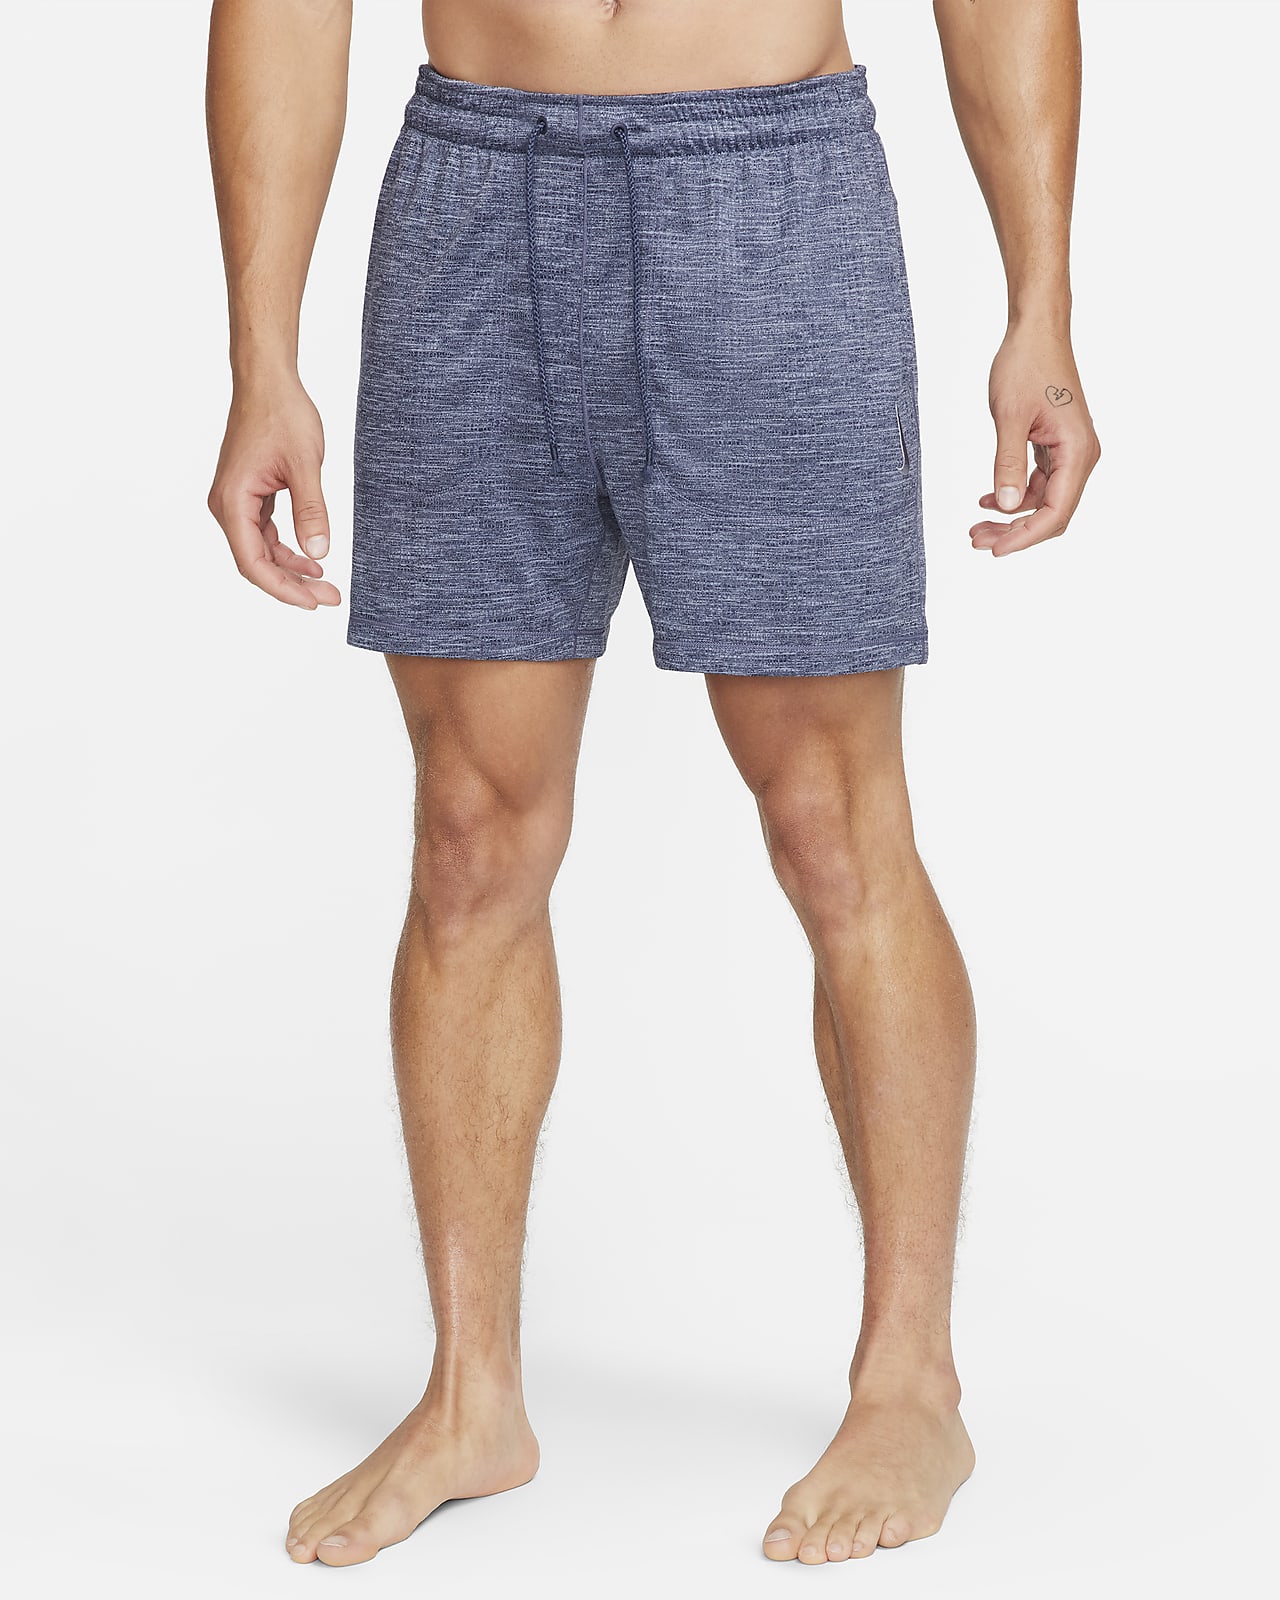 Nike Mens Dri-Fit Yoga Training Compression Shorts M Grey